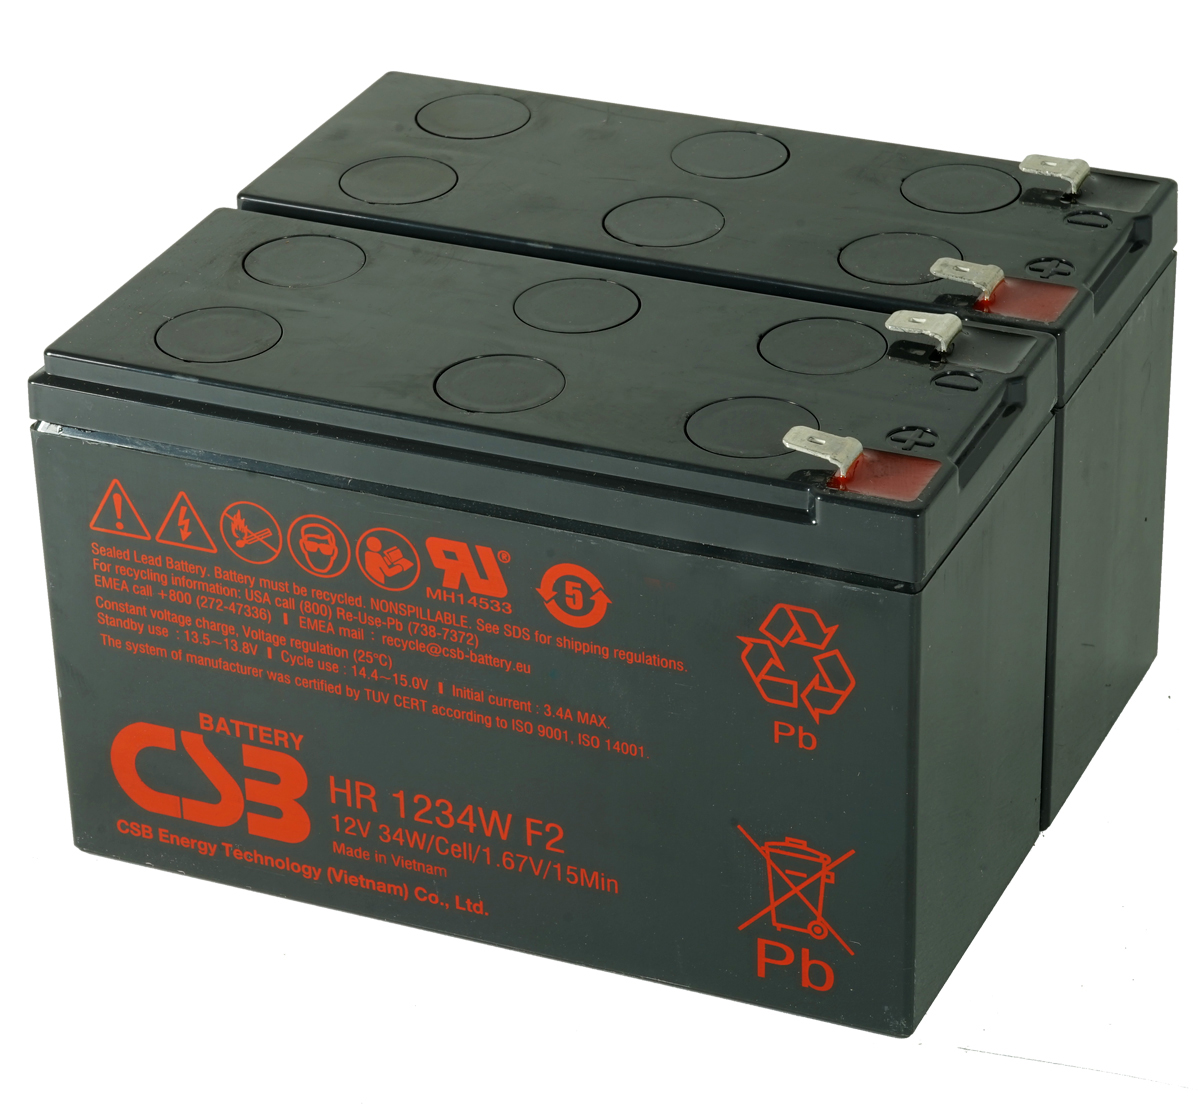 MDSV203 UPS Battery Kit - Replaces APC RBCV203